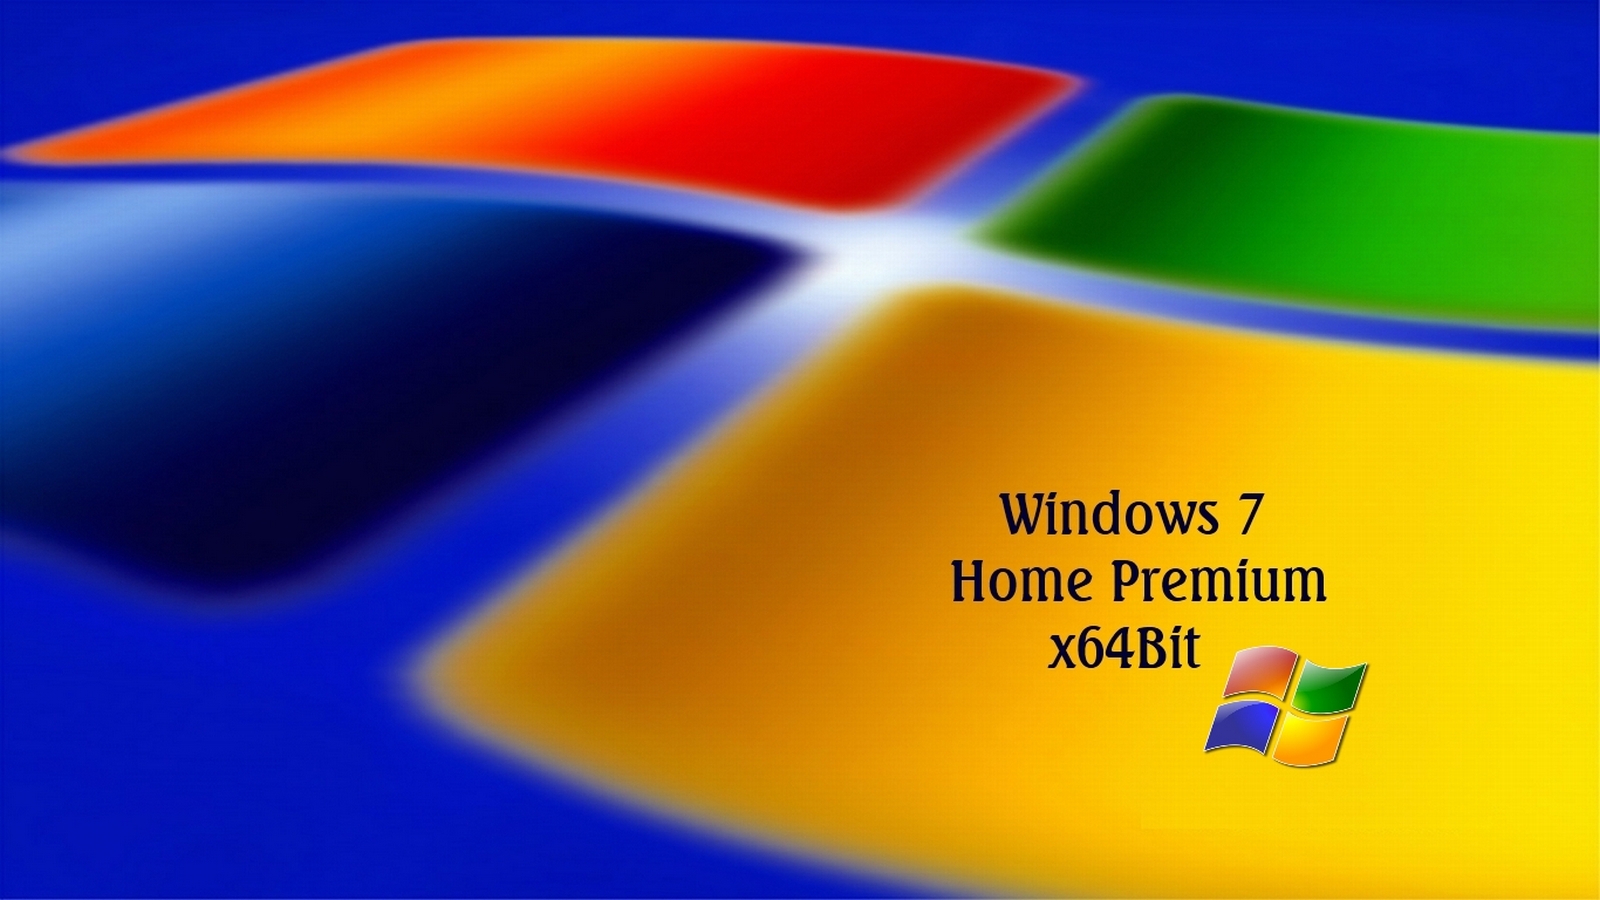 Windows 7 home premium wallpaper